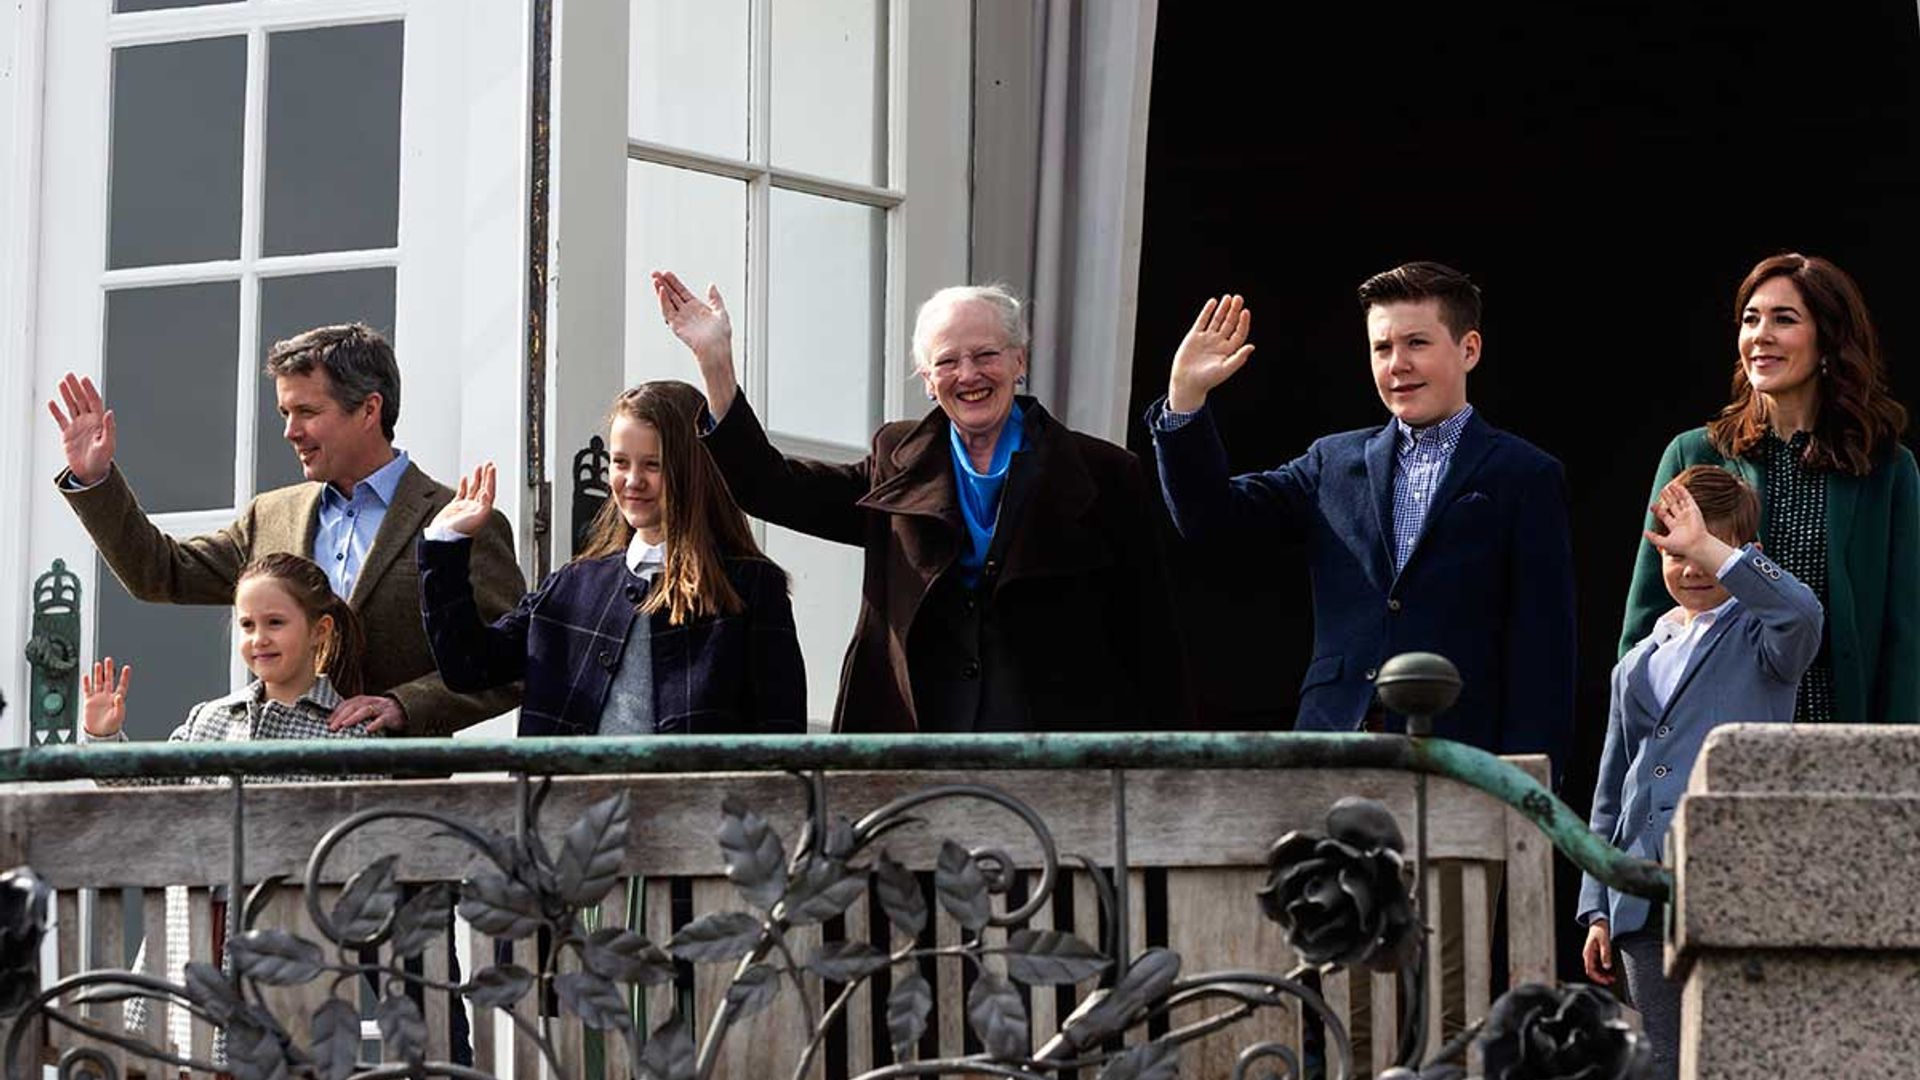 Danish royal family reveal their Christmas plans - details